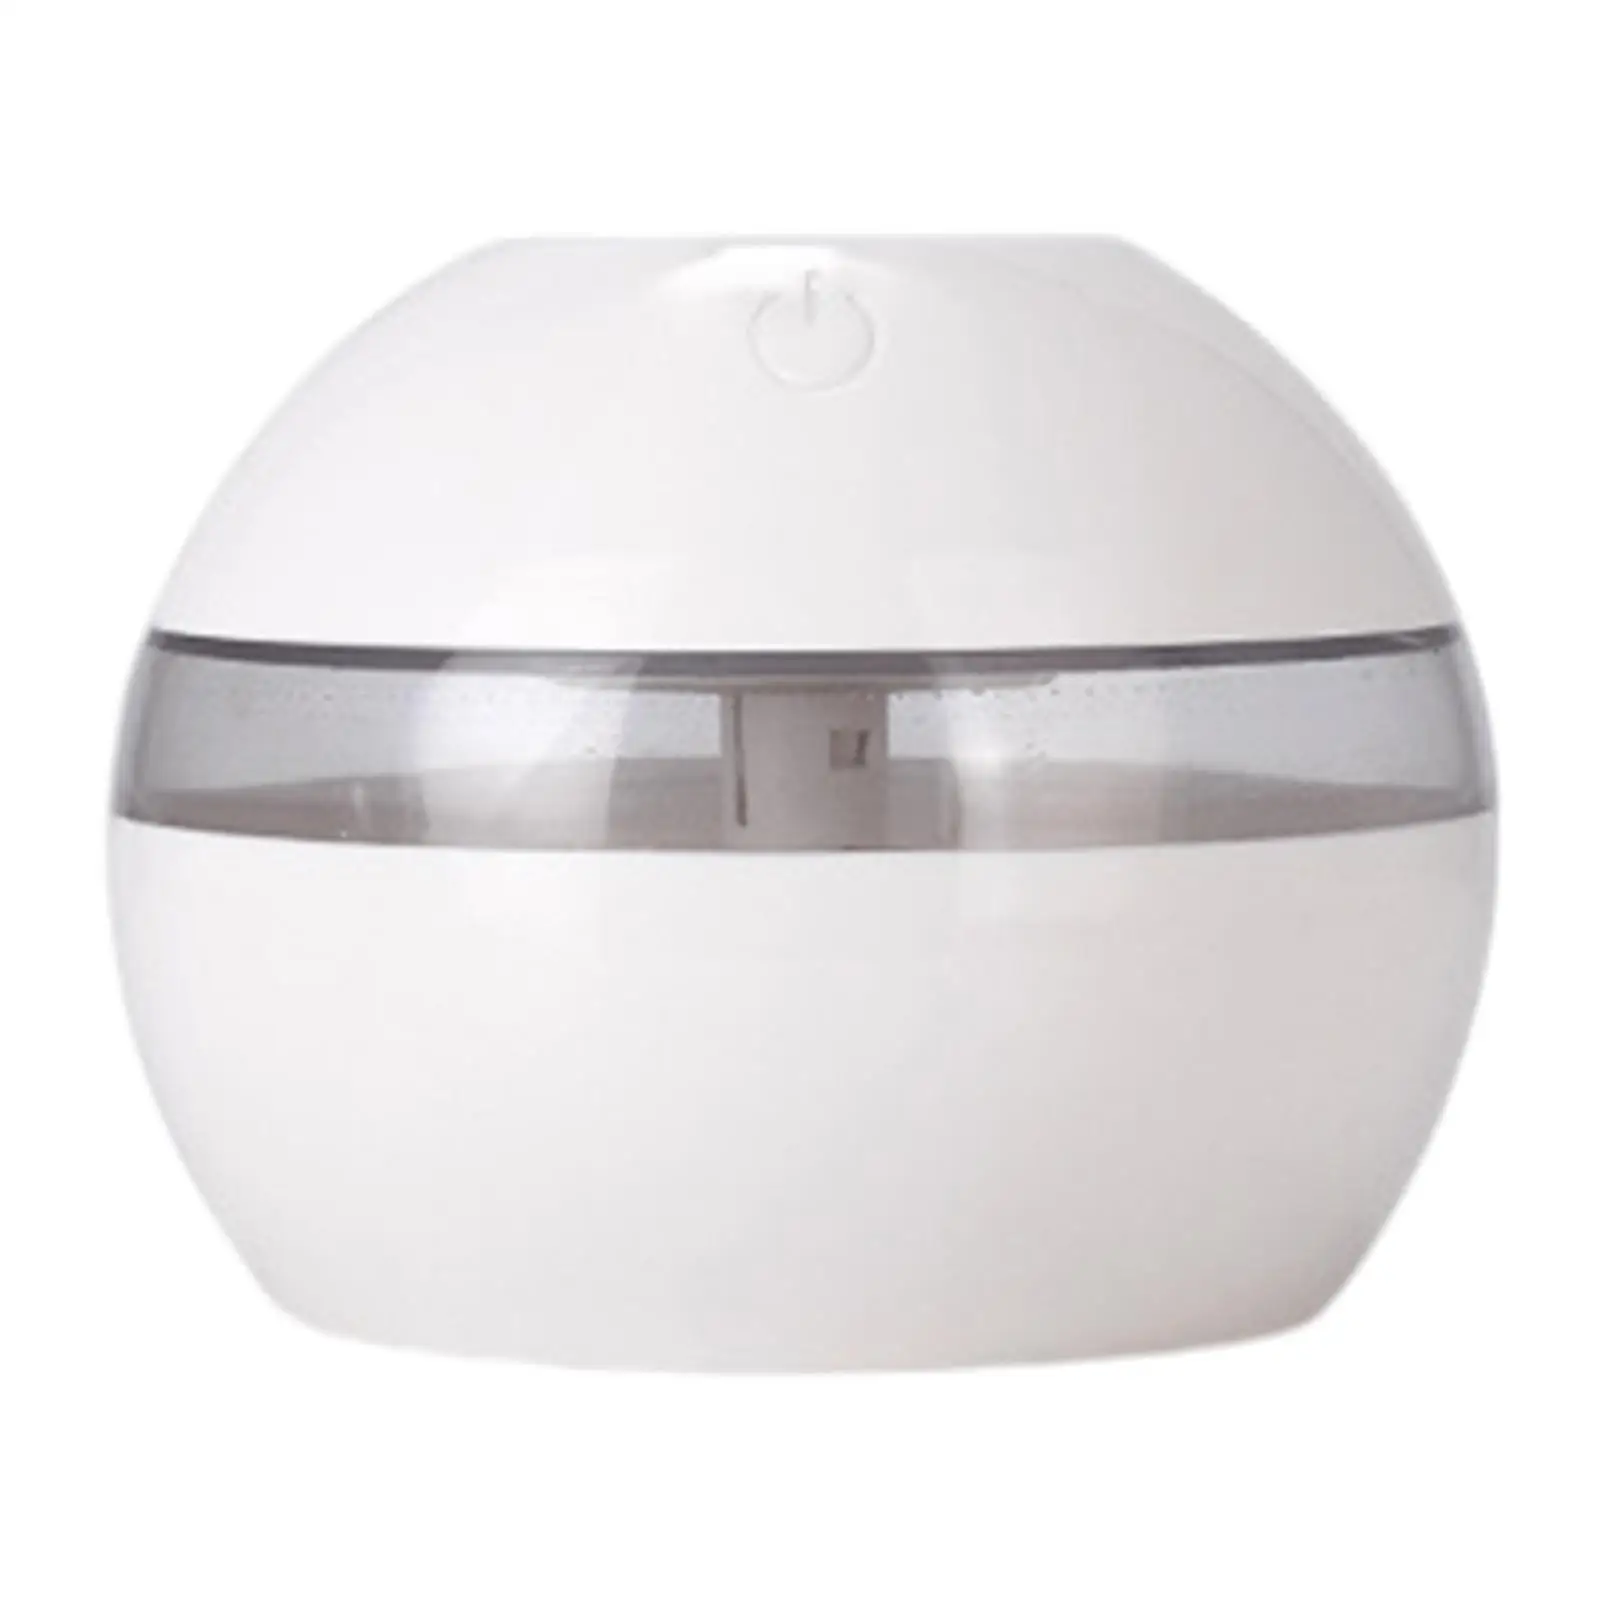 Humidifier USB Night Light Spherical USB Fan Threefor Bedroom